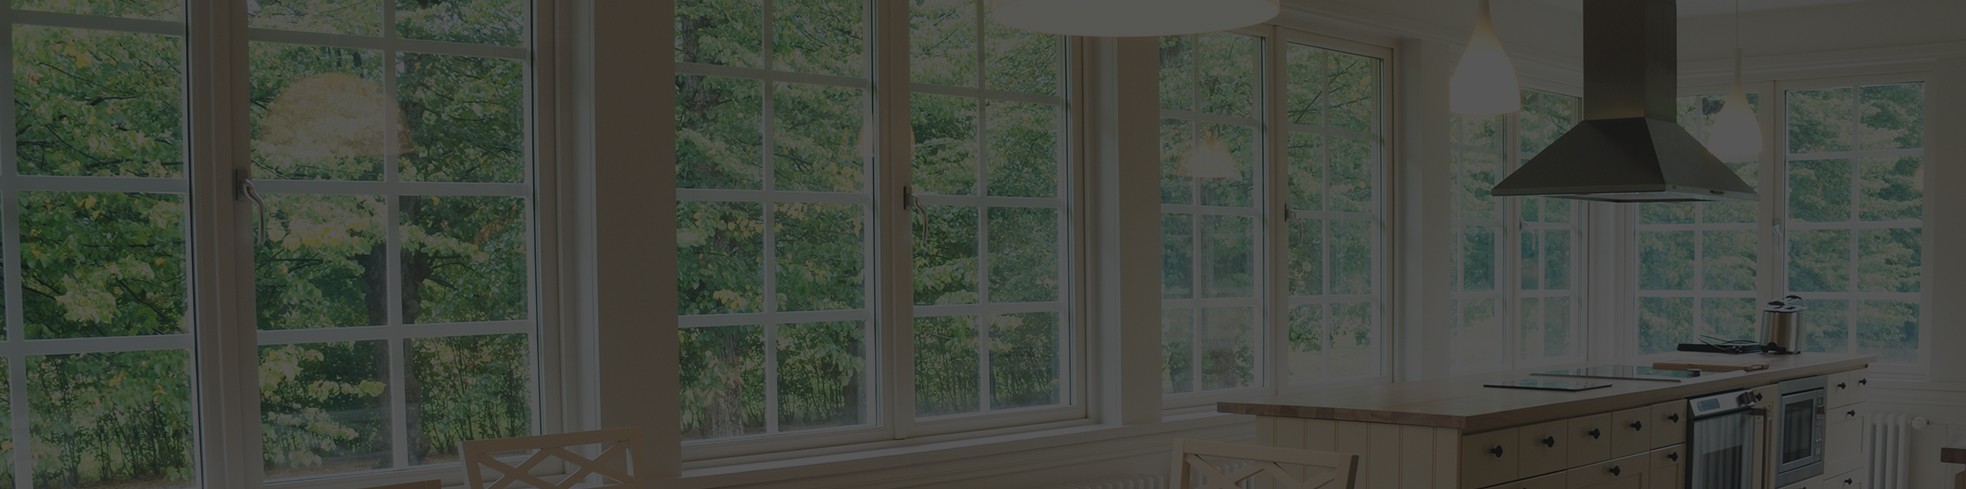 Replacement Casement Windows in Wisconsin Home